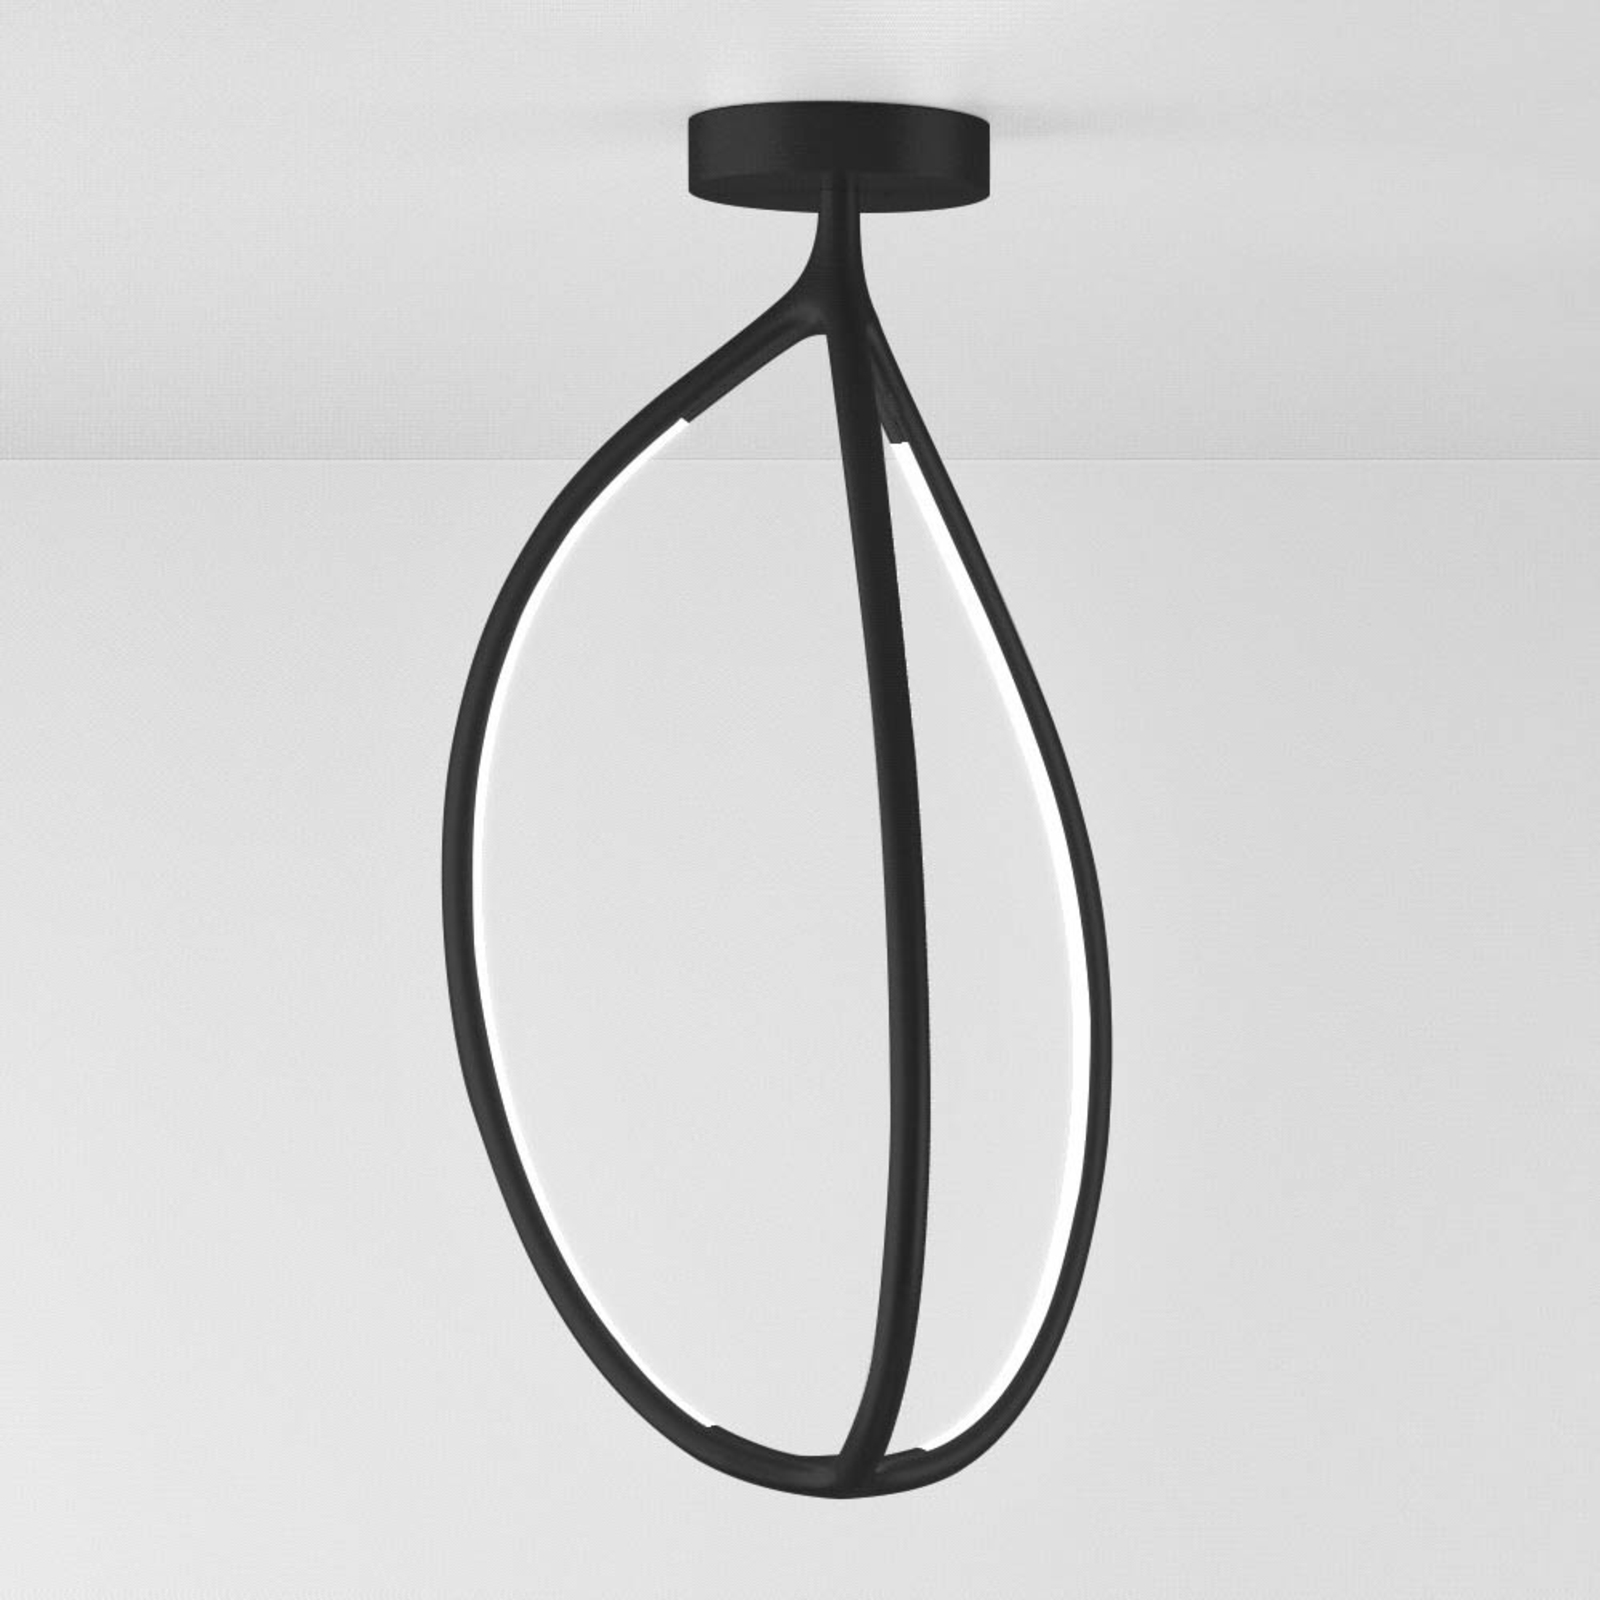 Artemide Arrival ceiling light, App, black, 70cm